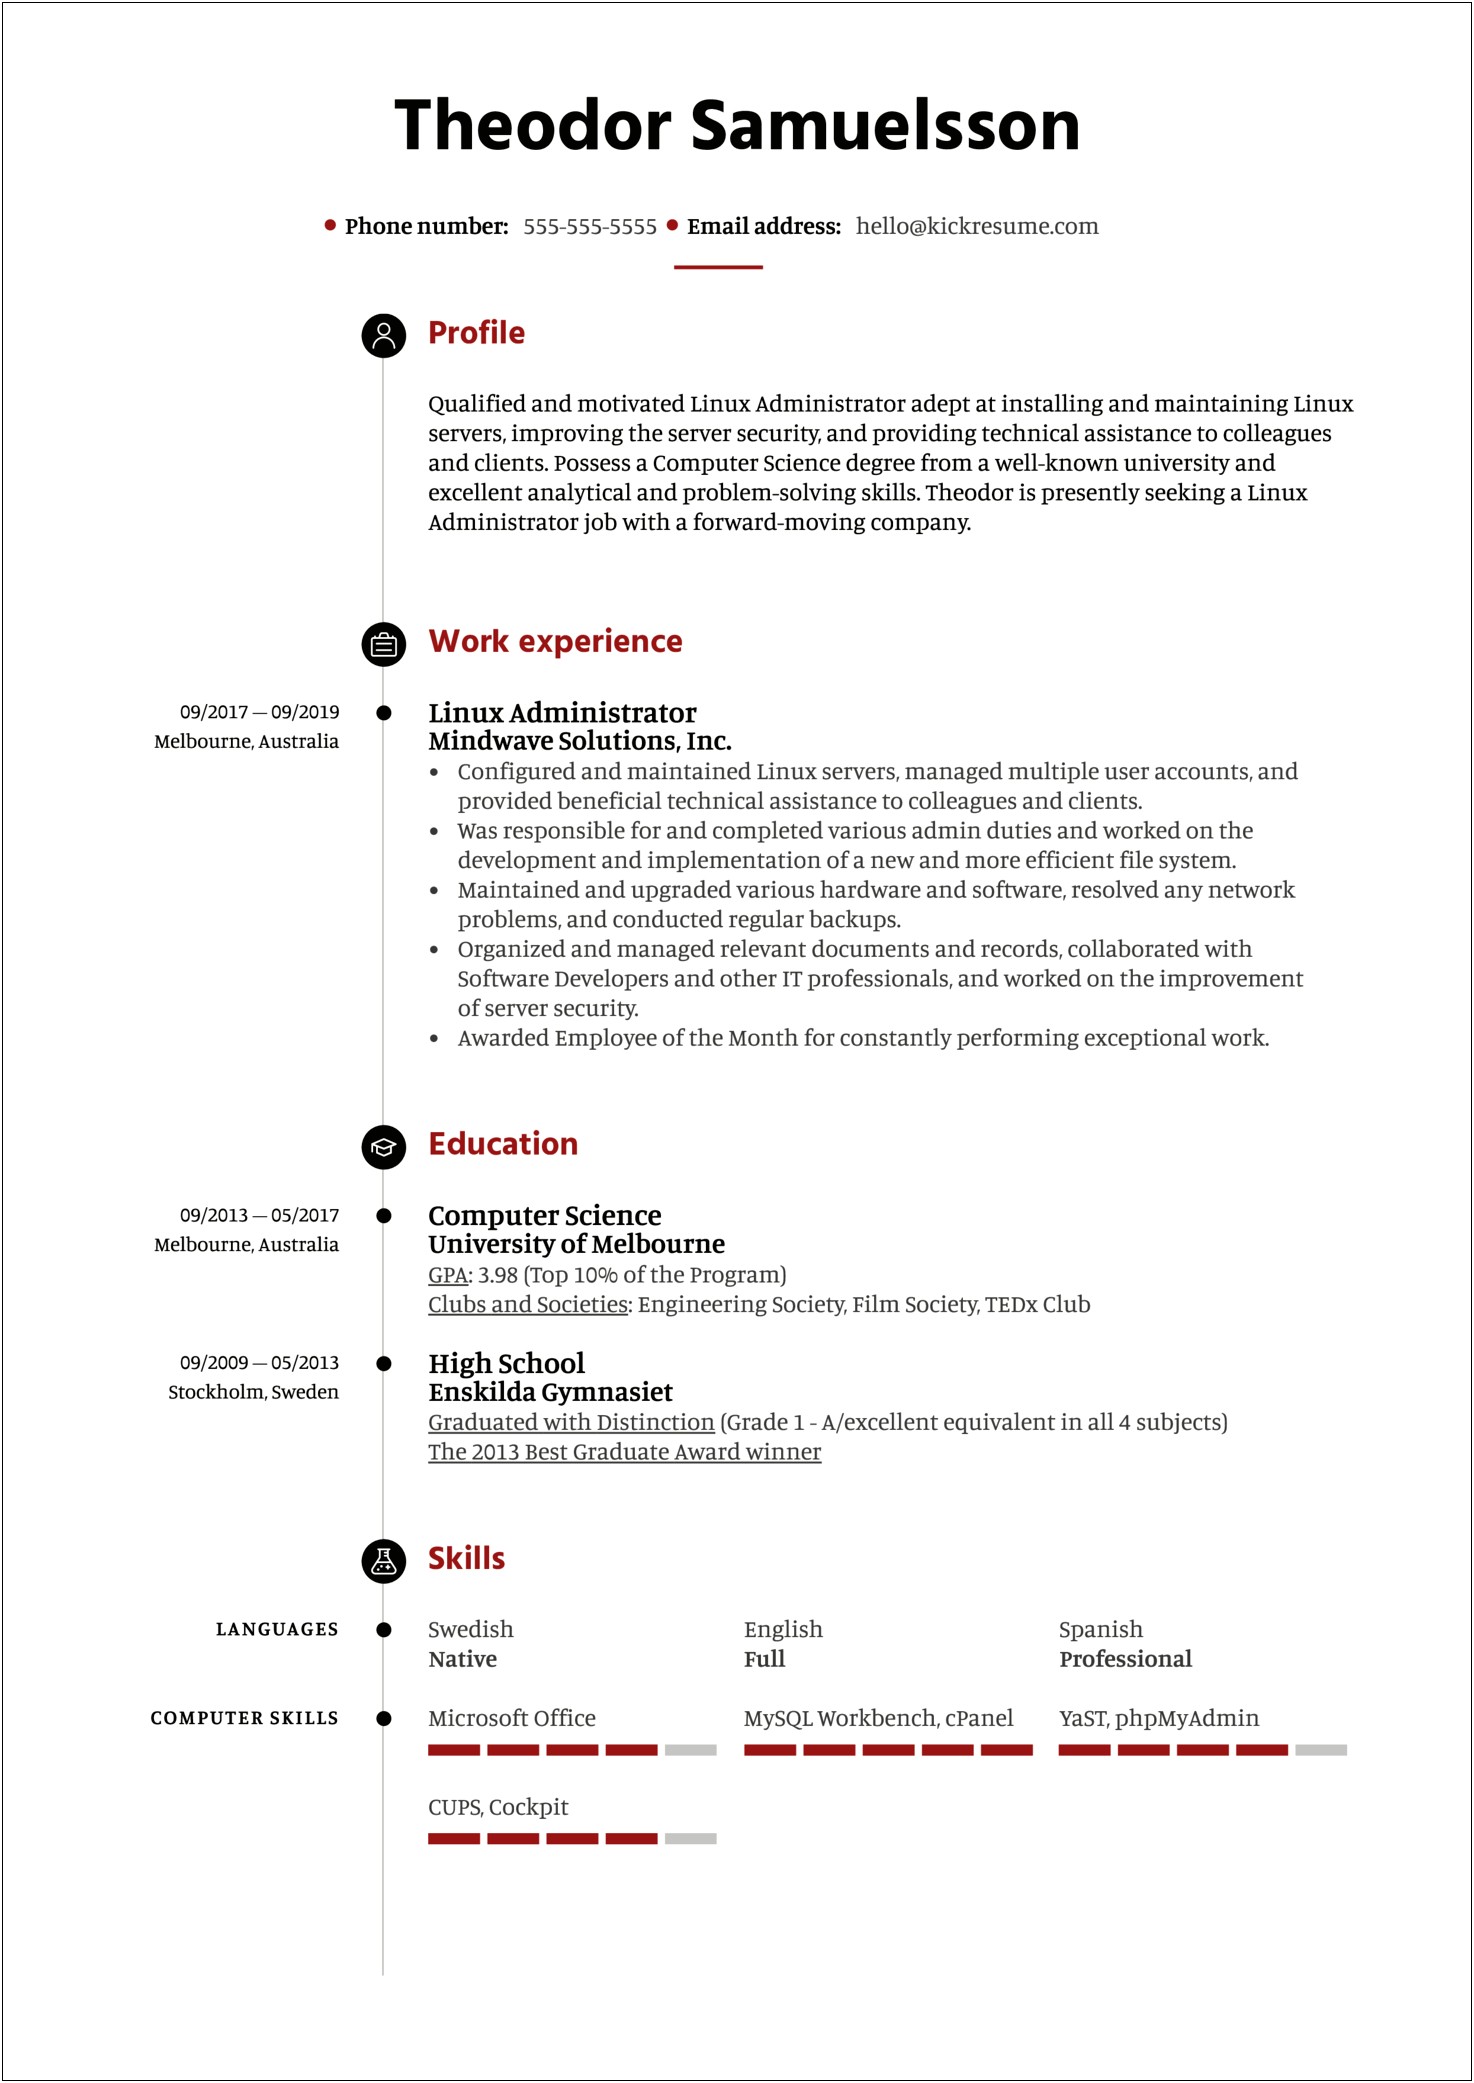 Resume For Security Job In Australia